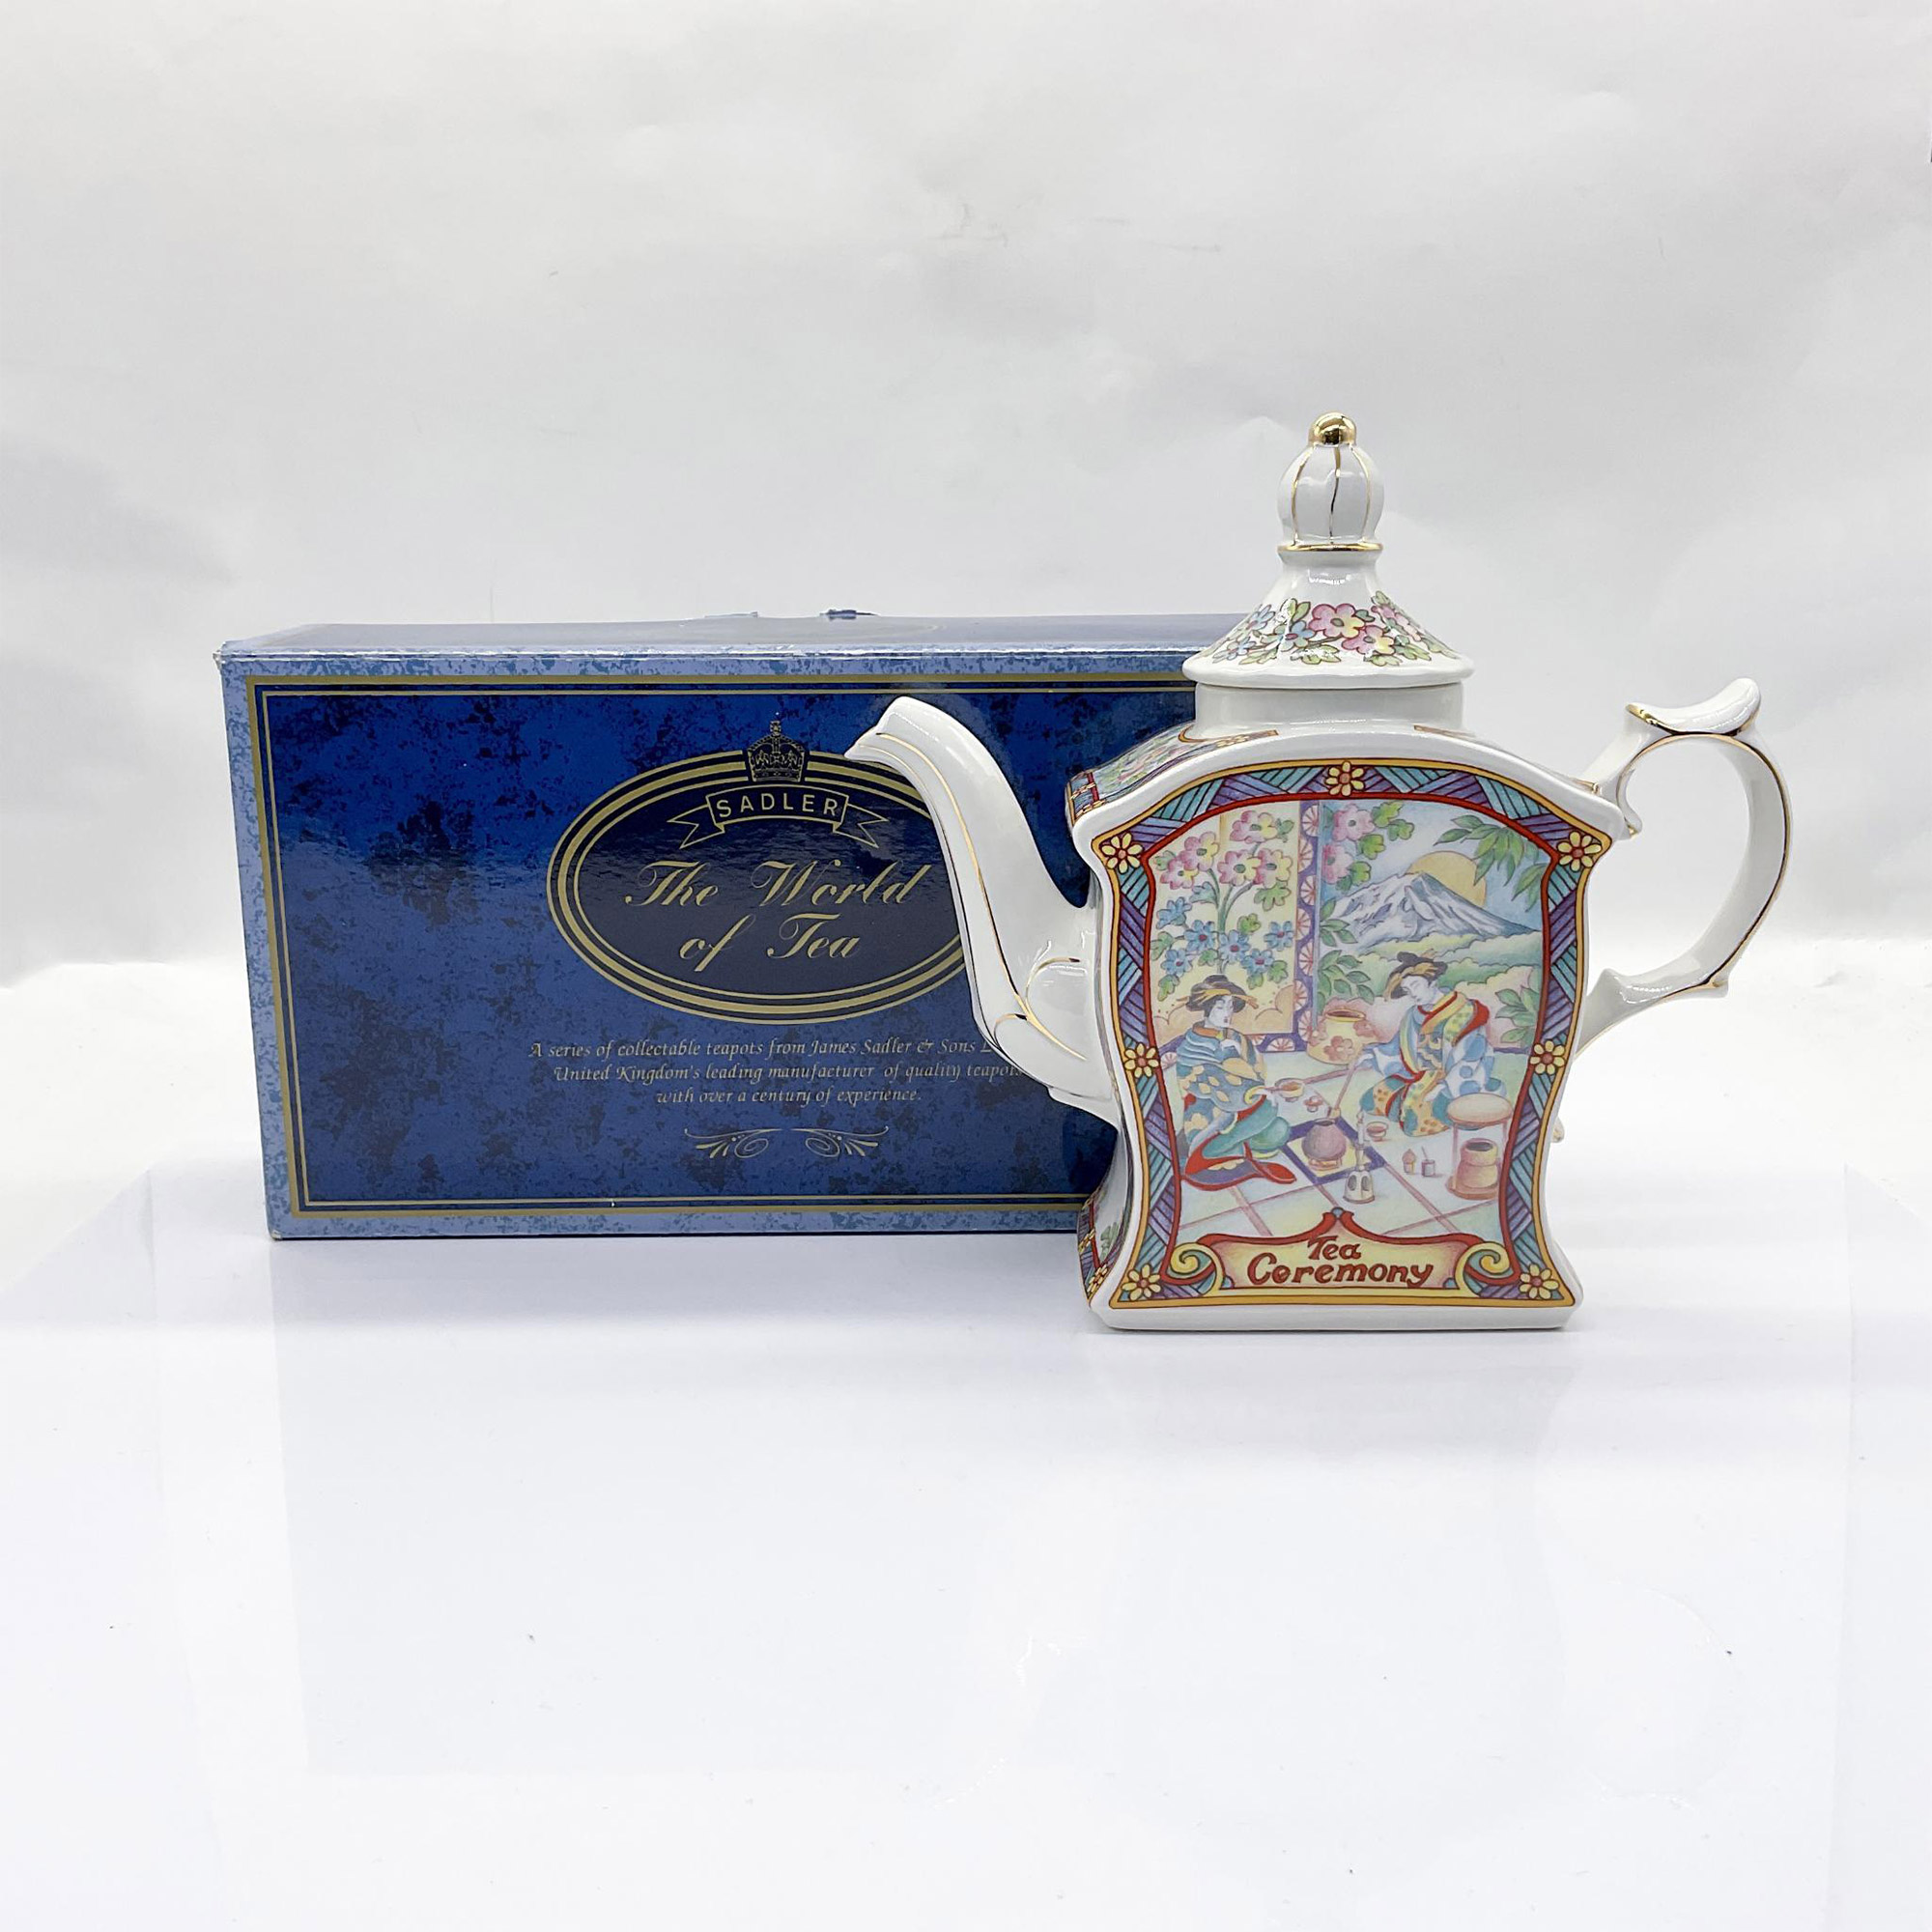 Sadler The World Of Tea Ceremony Tea Pot - Image 6 of 10